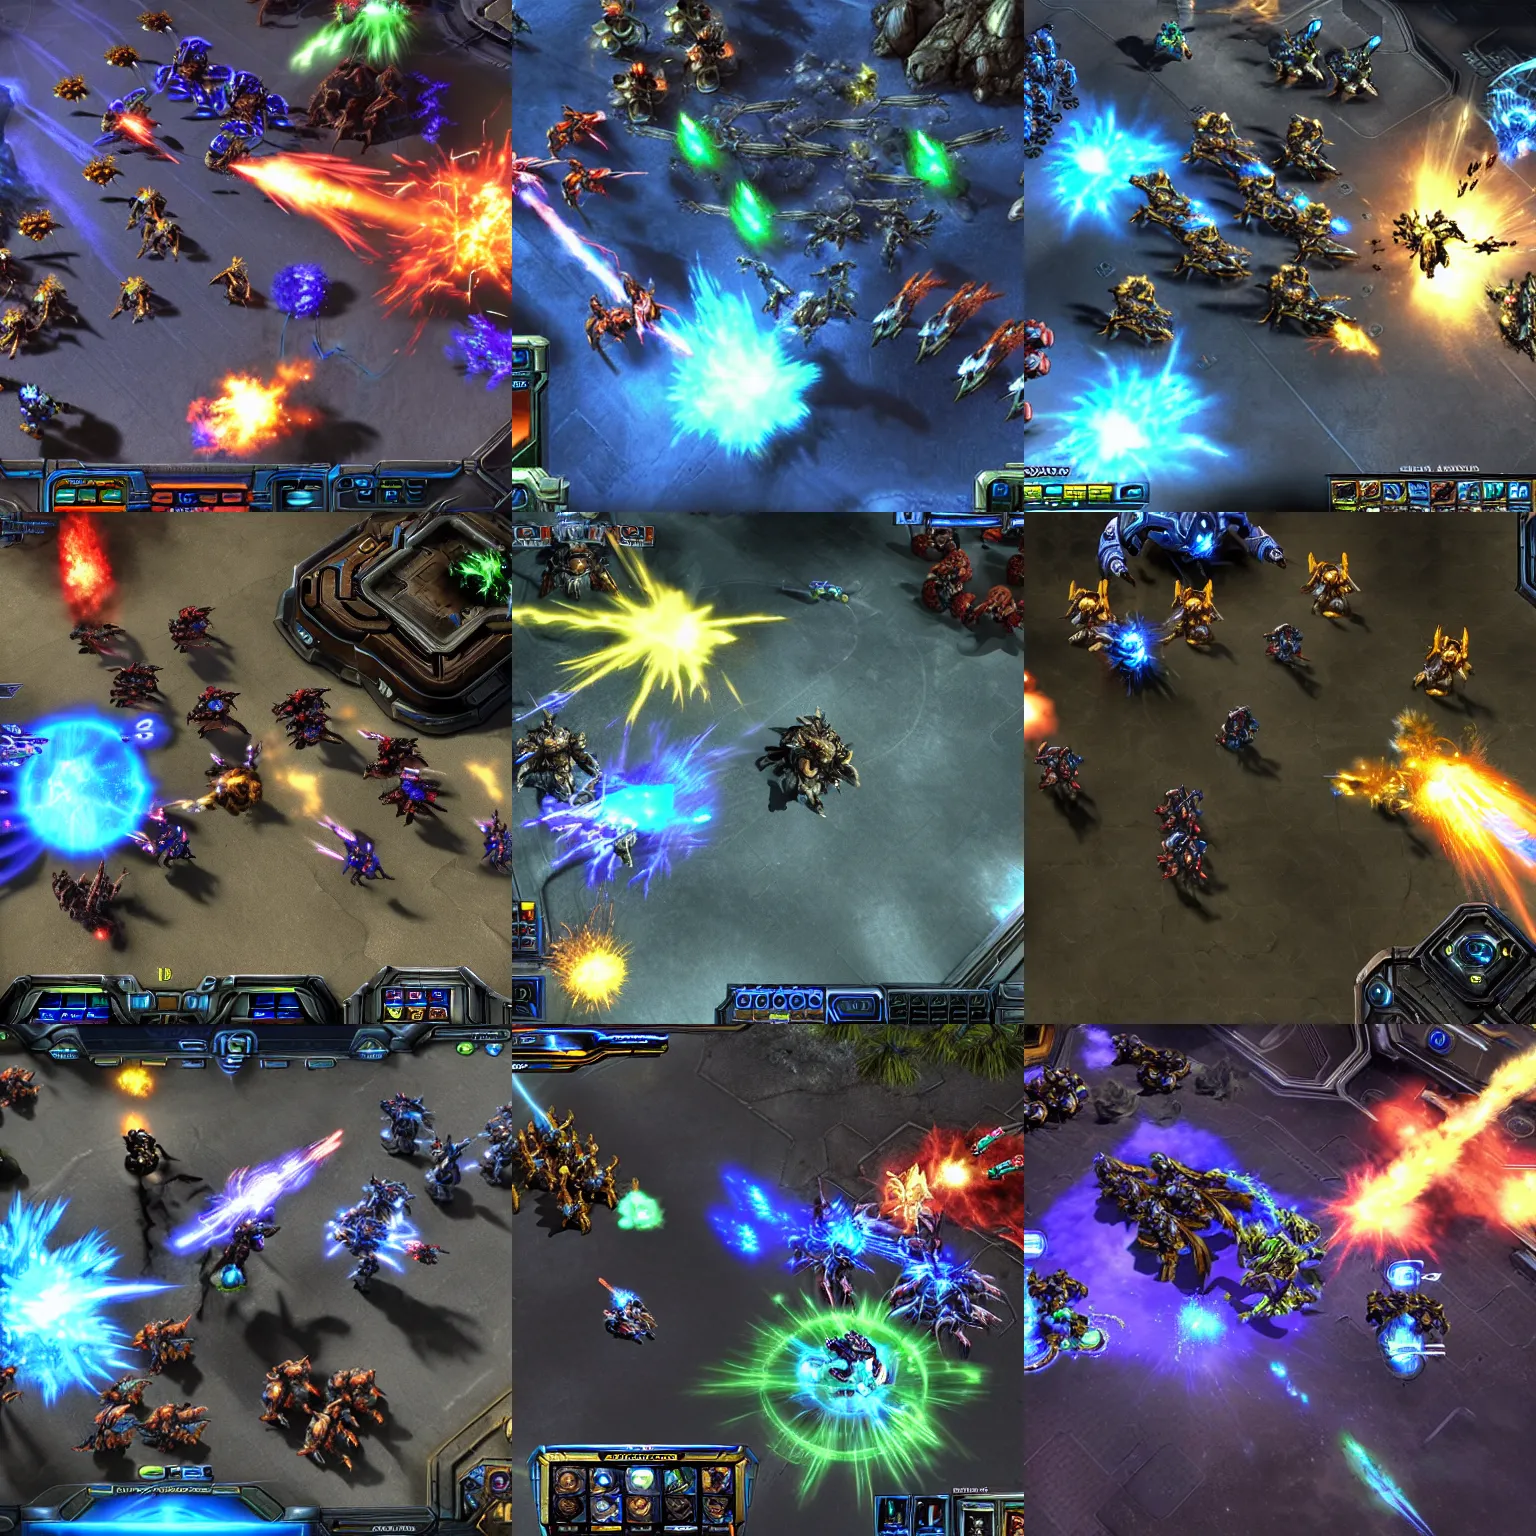 Prompt: screenshot of starcraft 3, chaotic battle